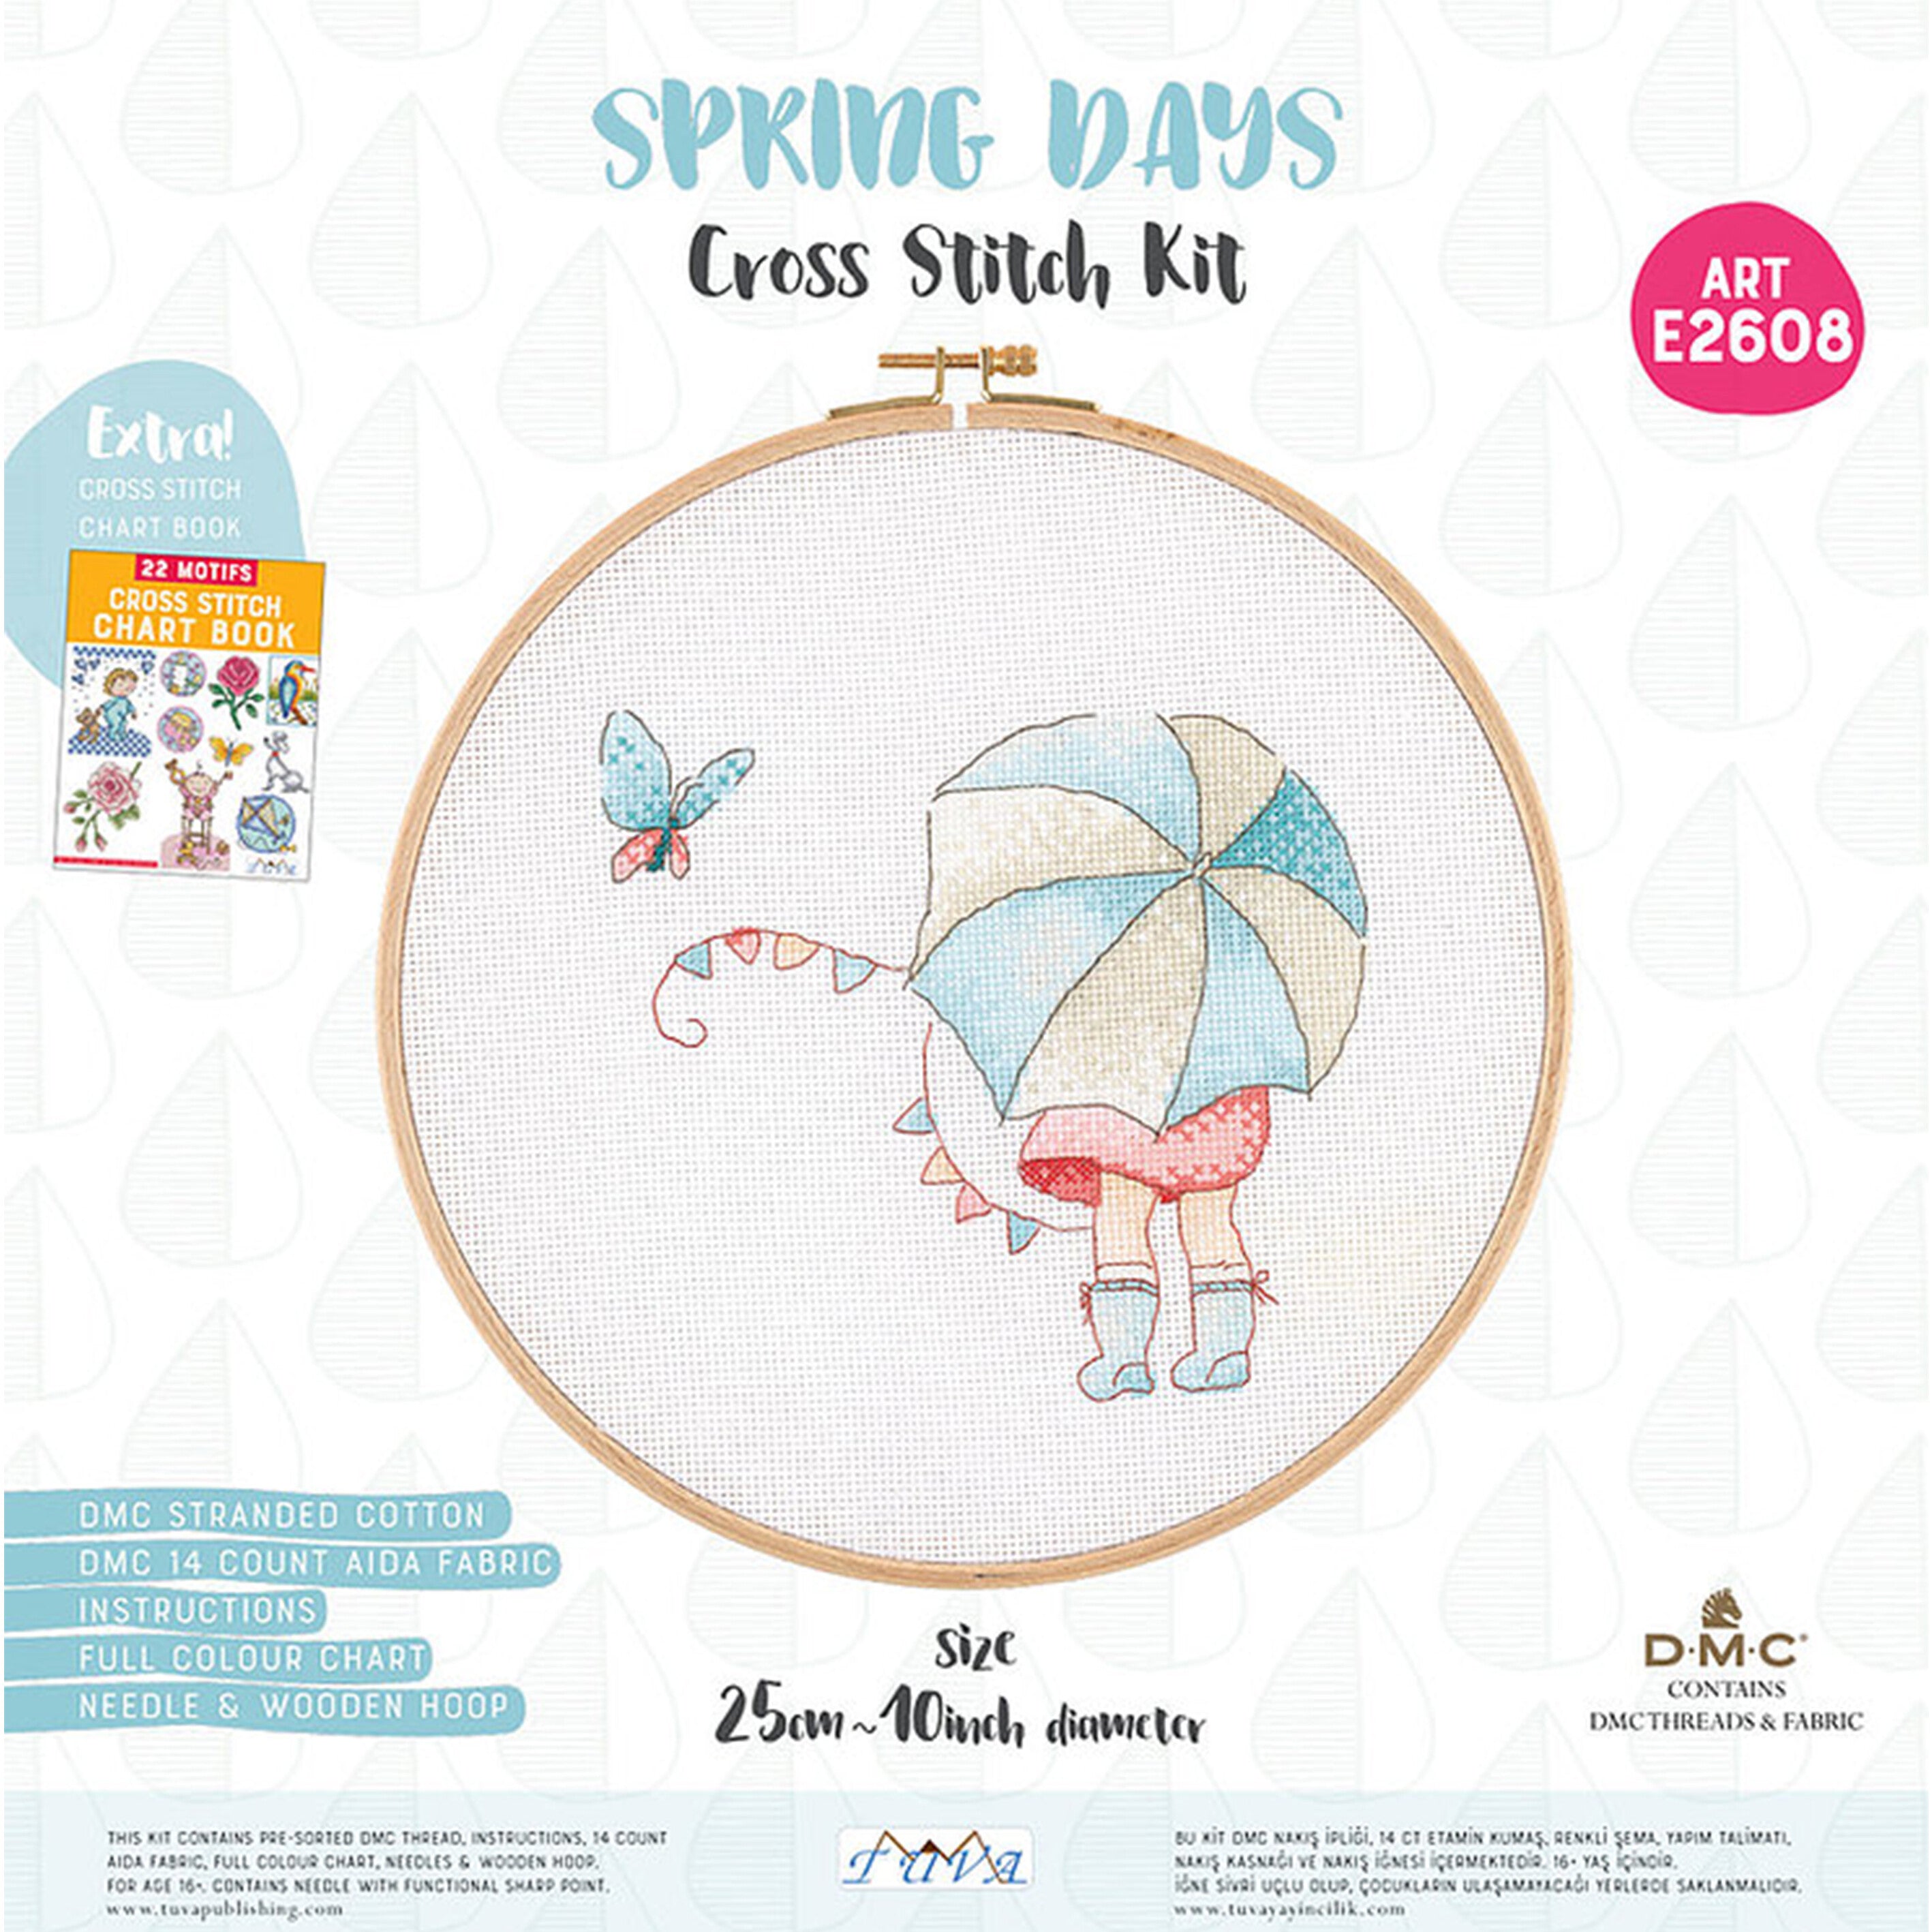 Tuva Cross Stitch Kit, Spring Days - E2608